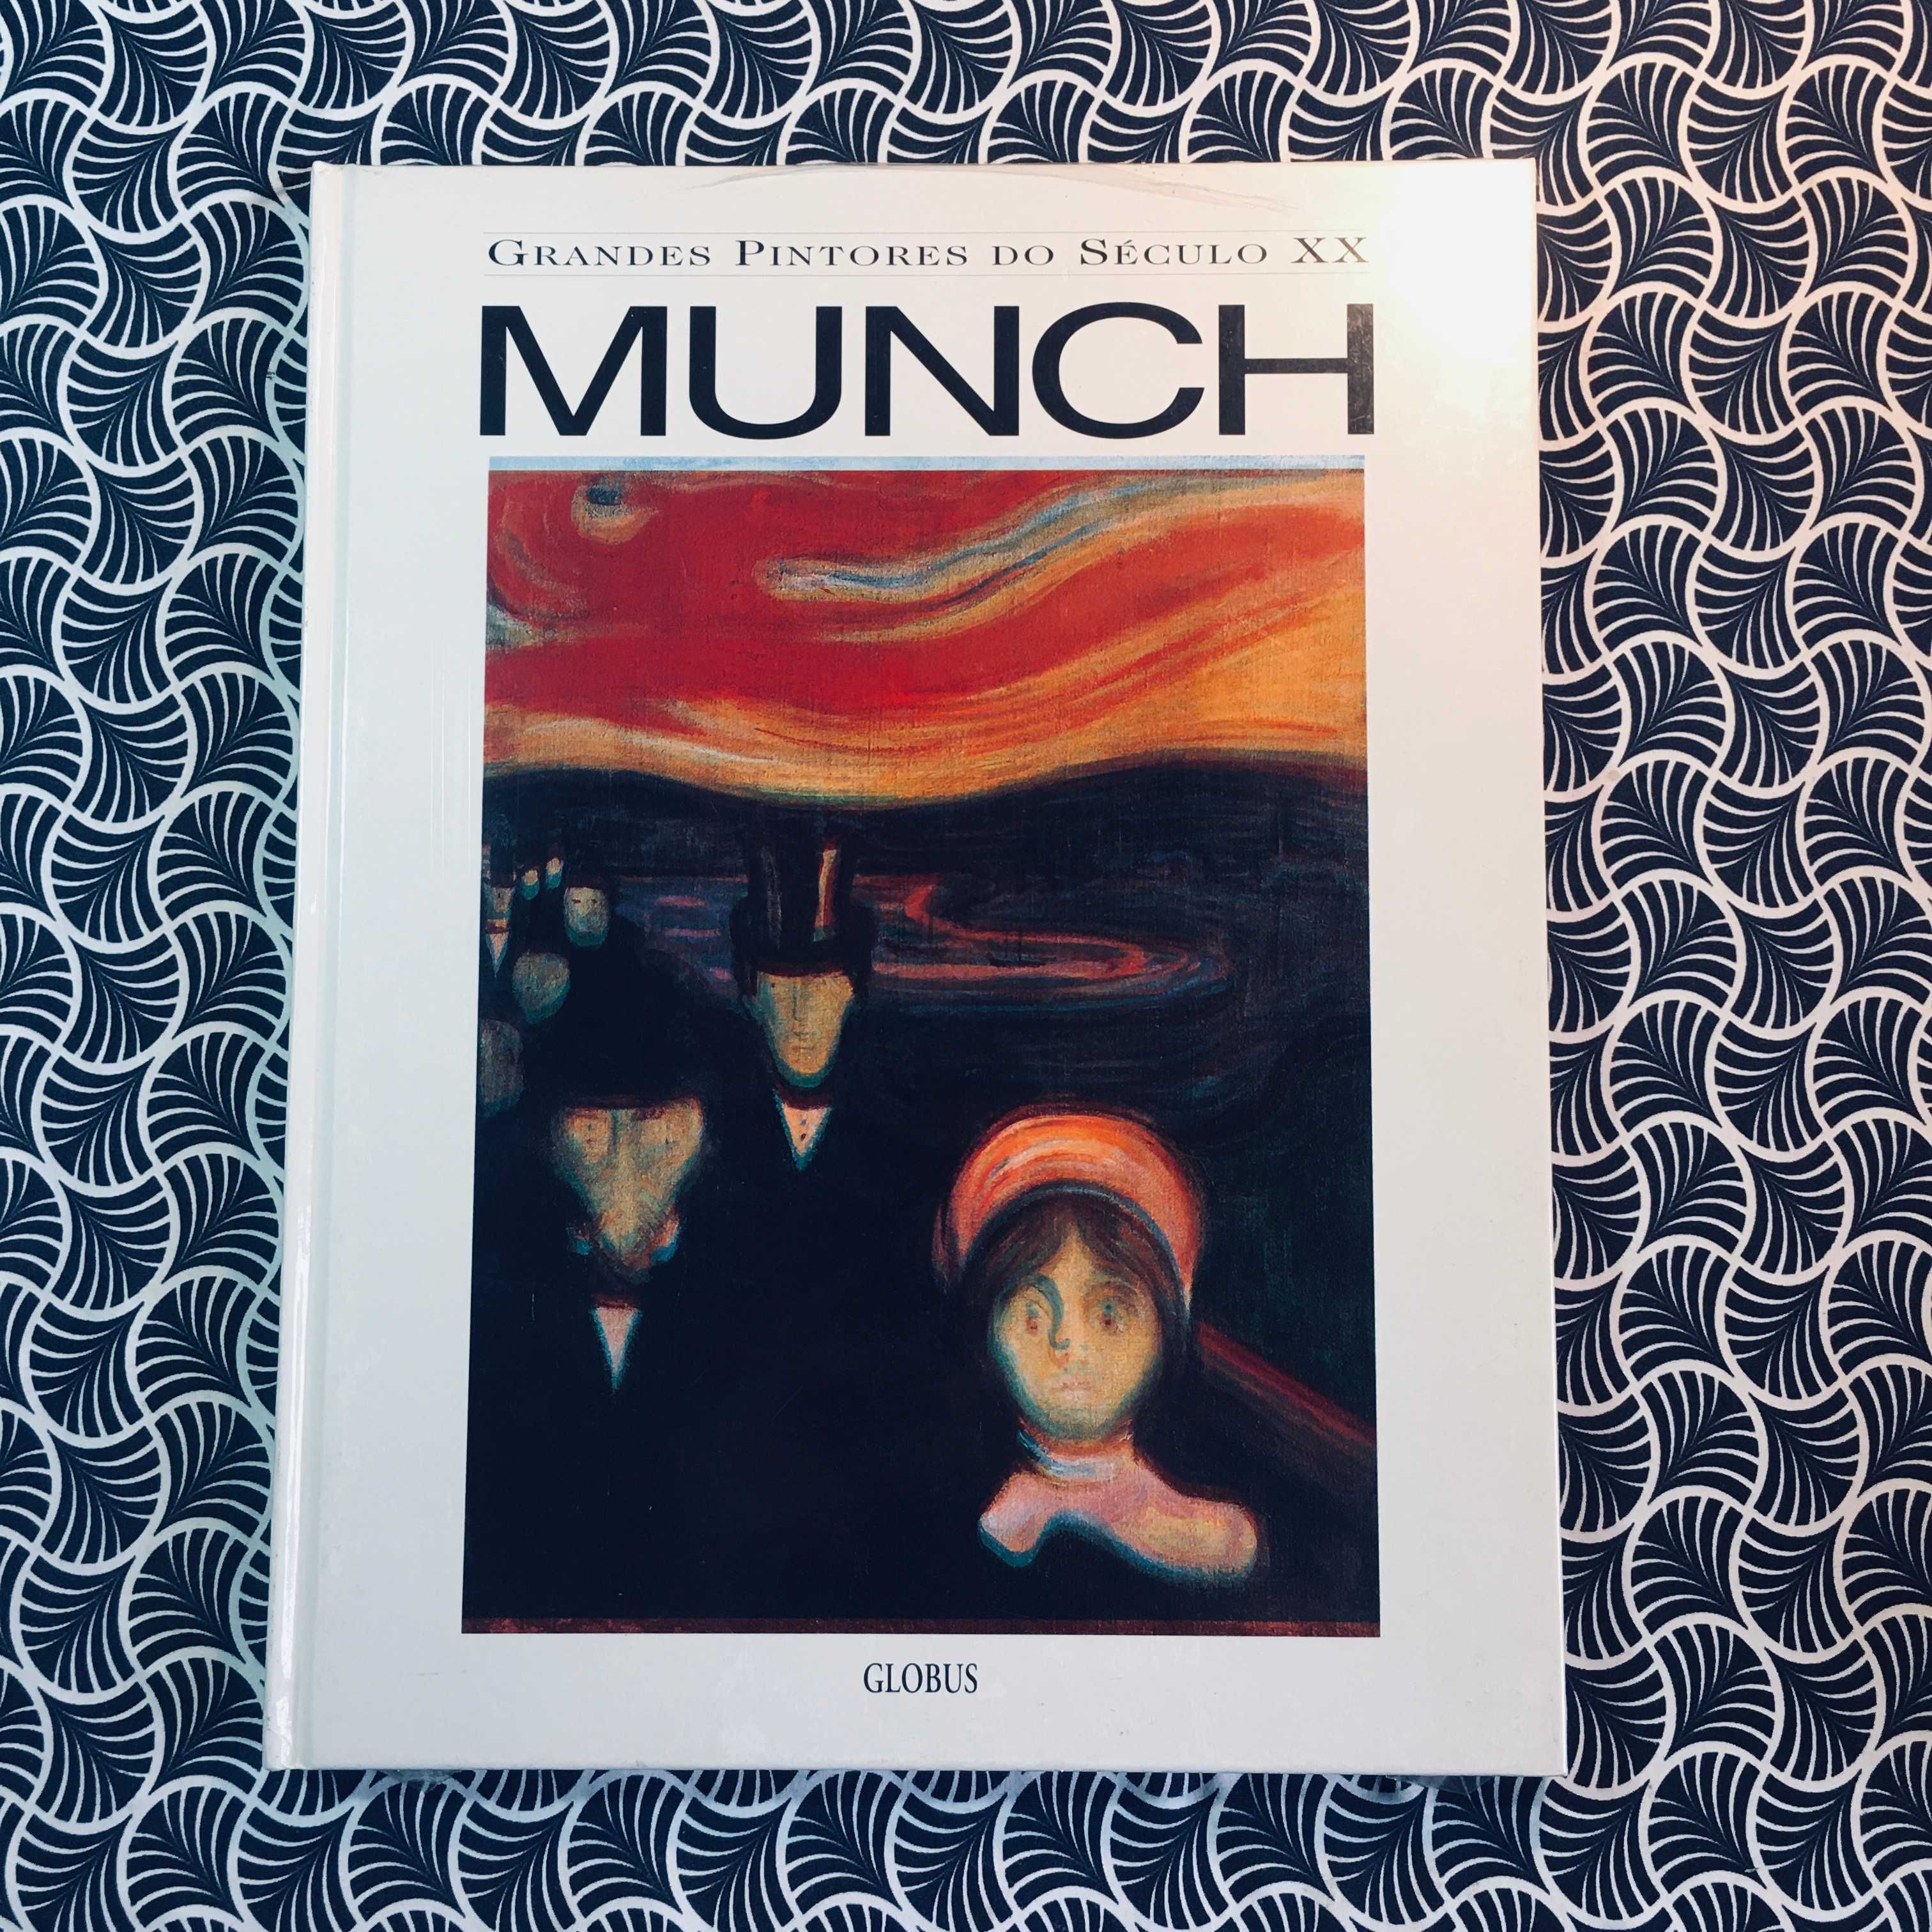 Munch: Grandes Pintores do Século XX nº8